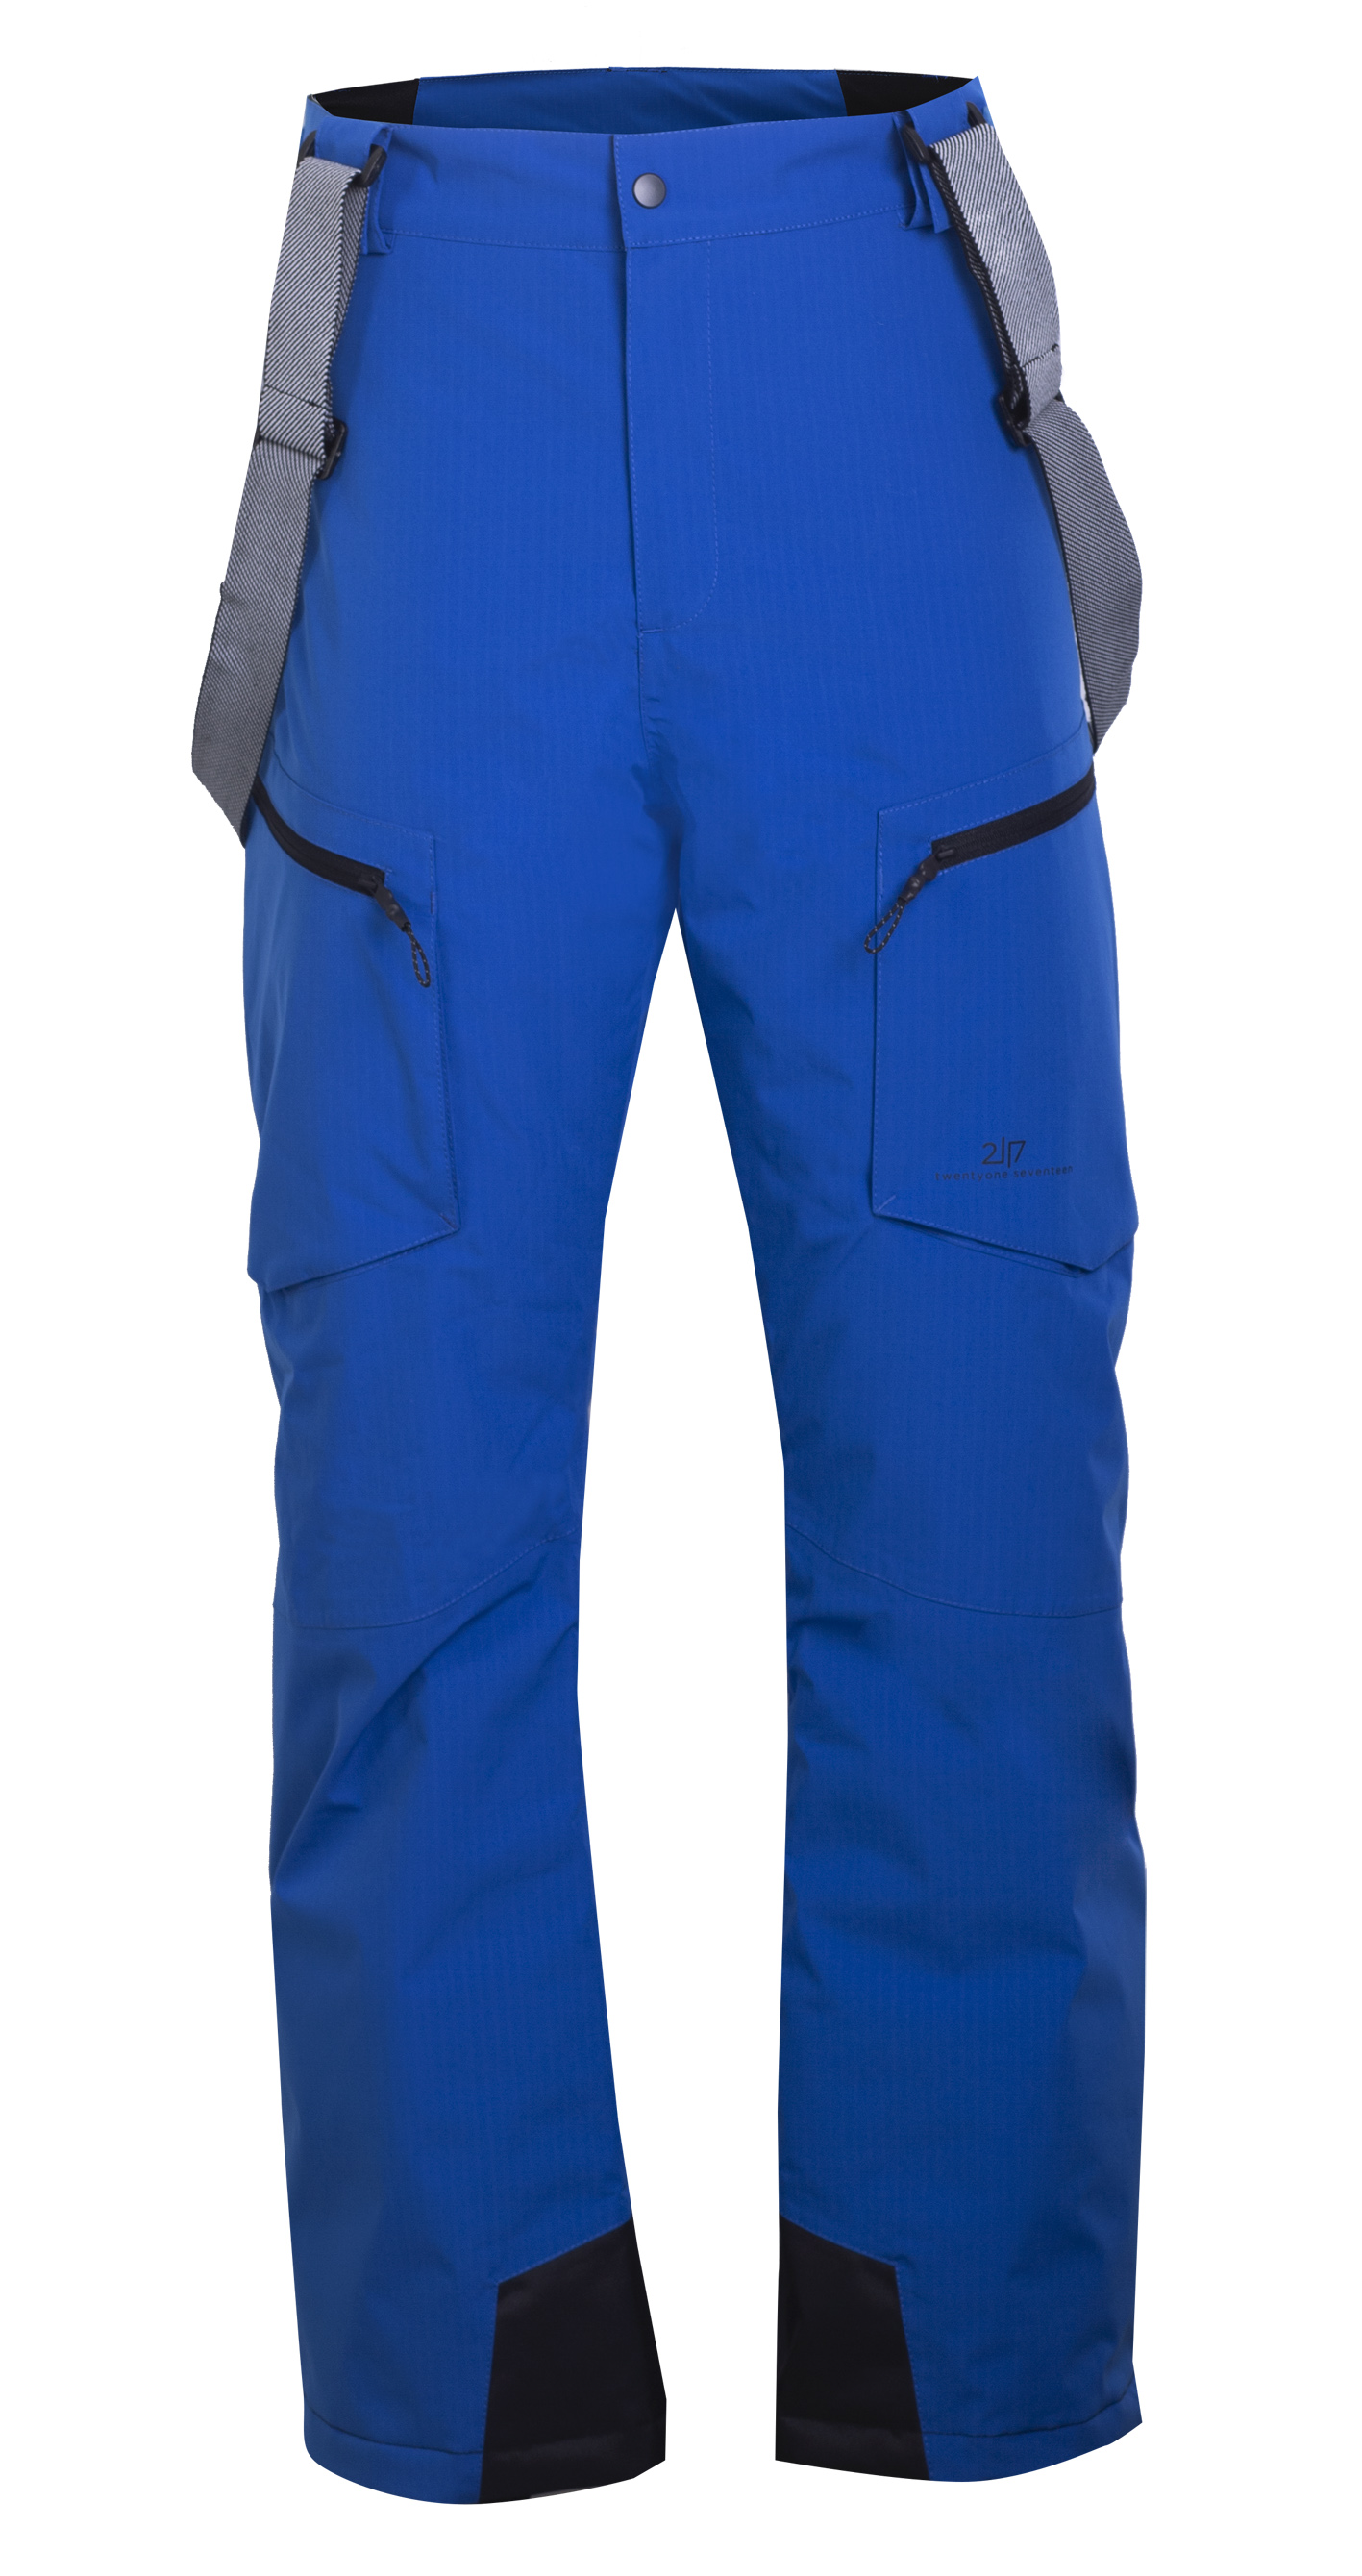 NYHEM - ECO Ανδρικό ελαφρύ θερμικό παντελόνι σκι - Μπλε